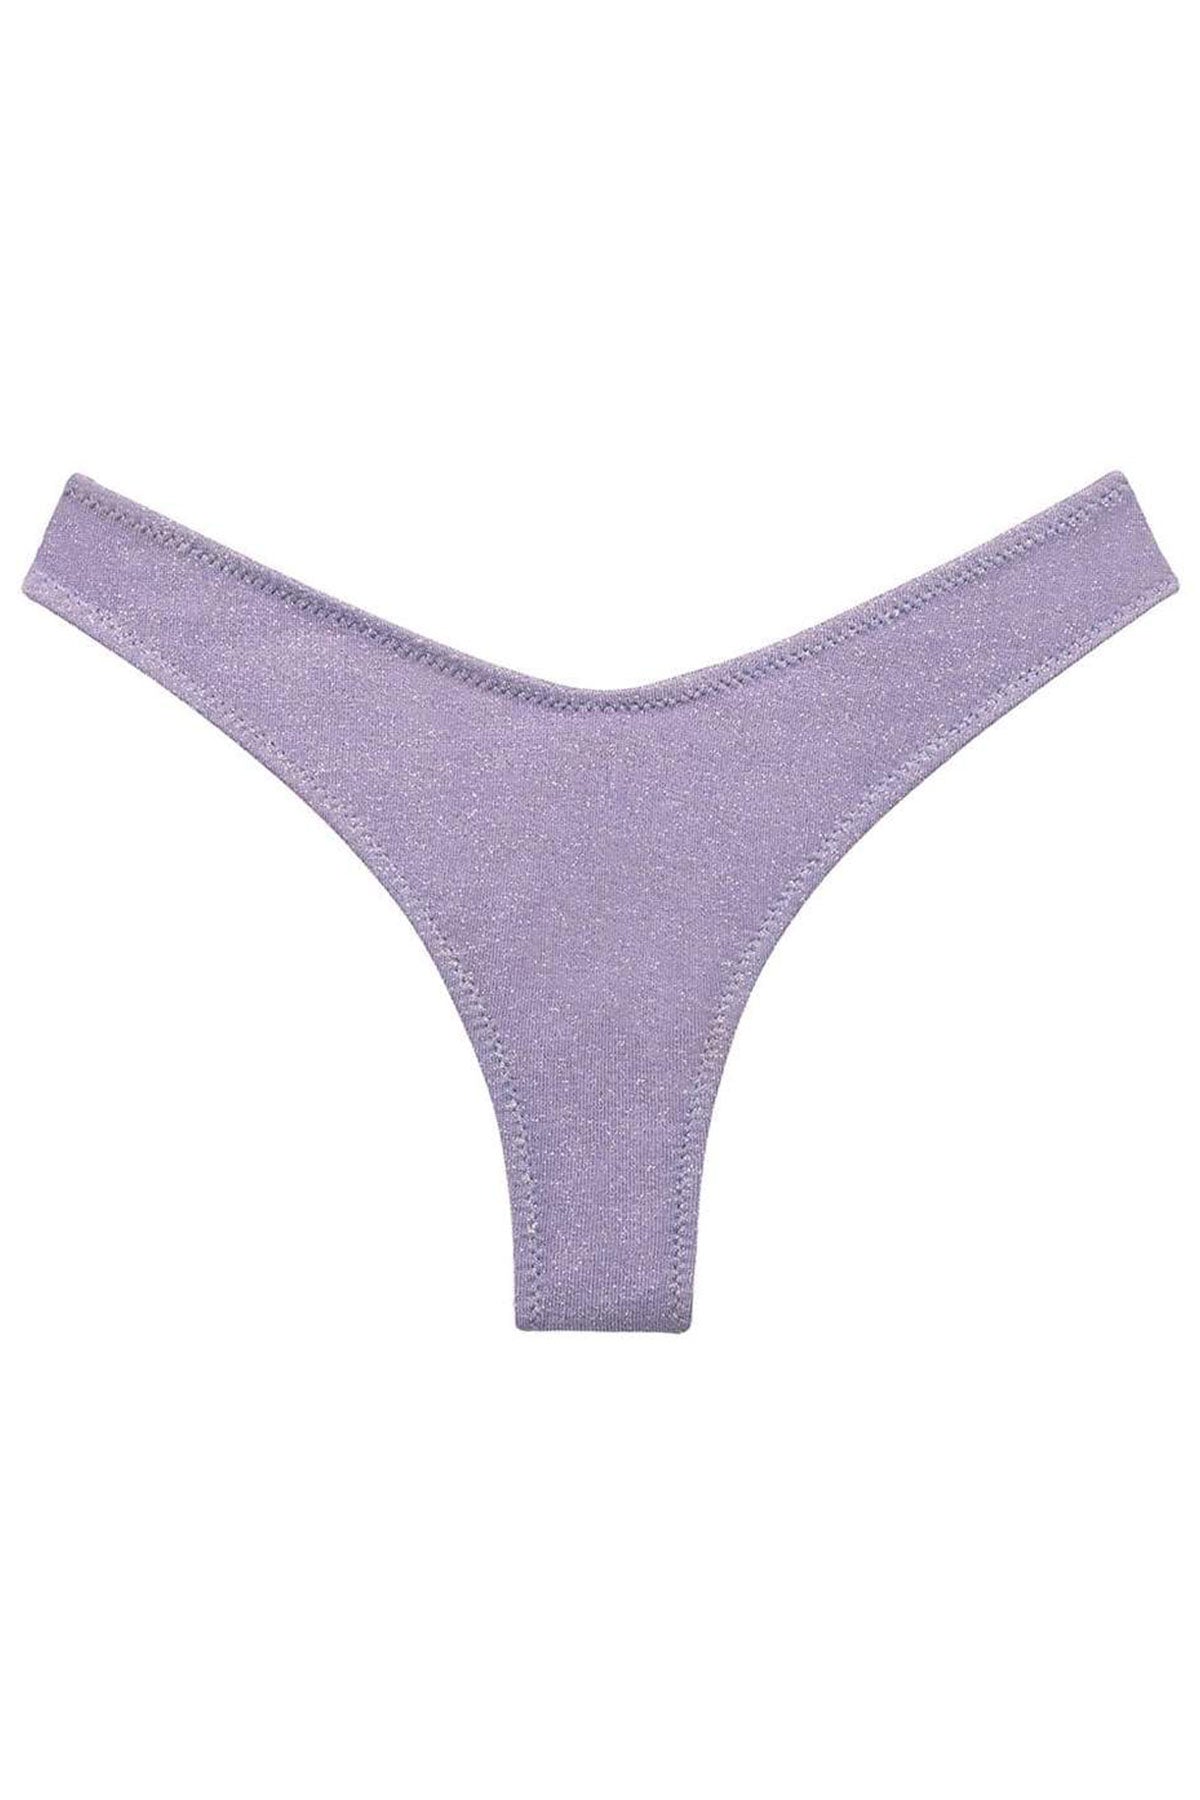 Lilac Sparkle Lulu (Zig Zag Stitch) Bikini Bottom - shop-olivia.com